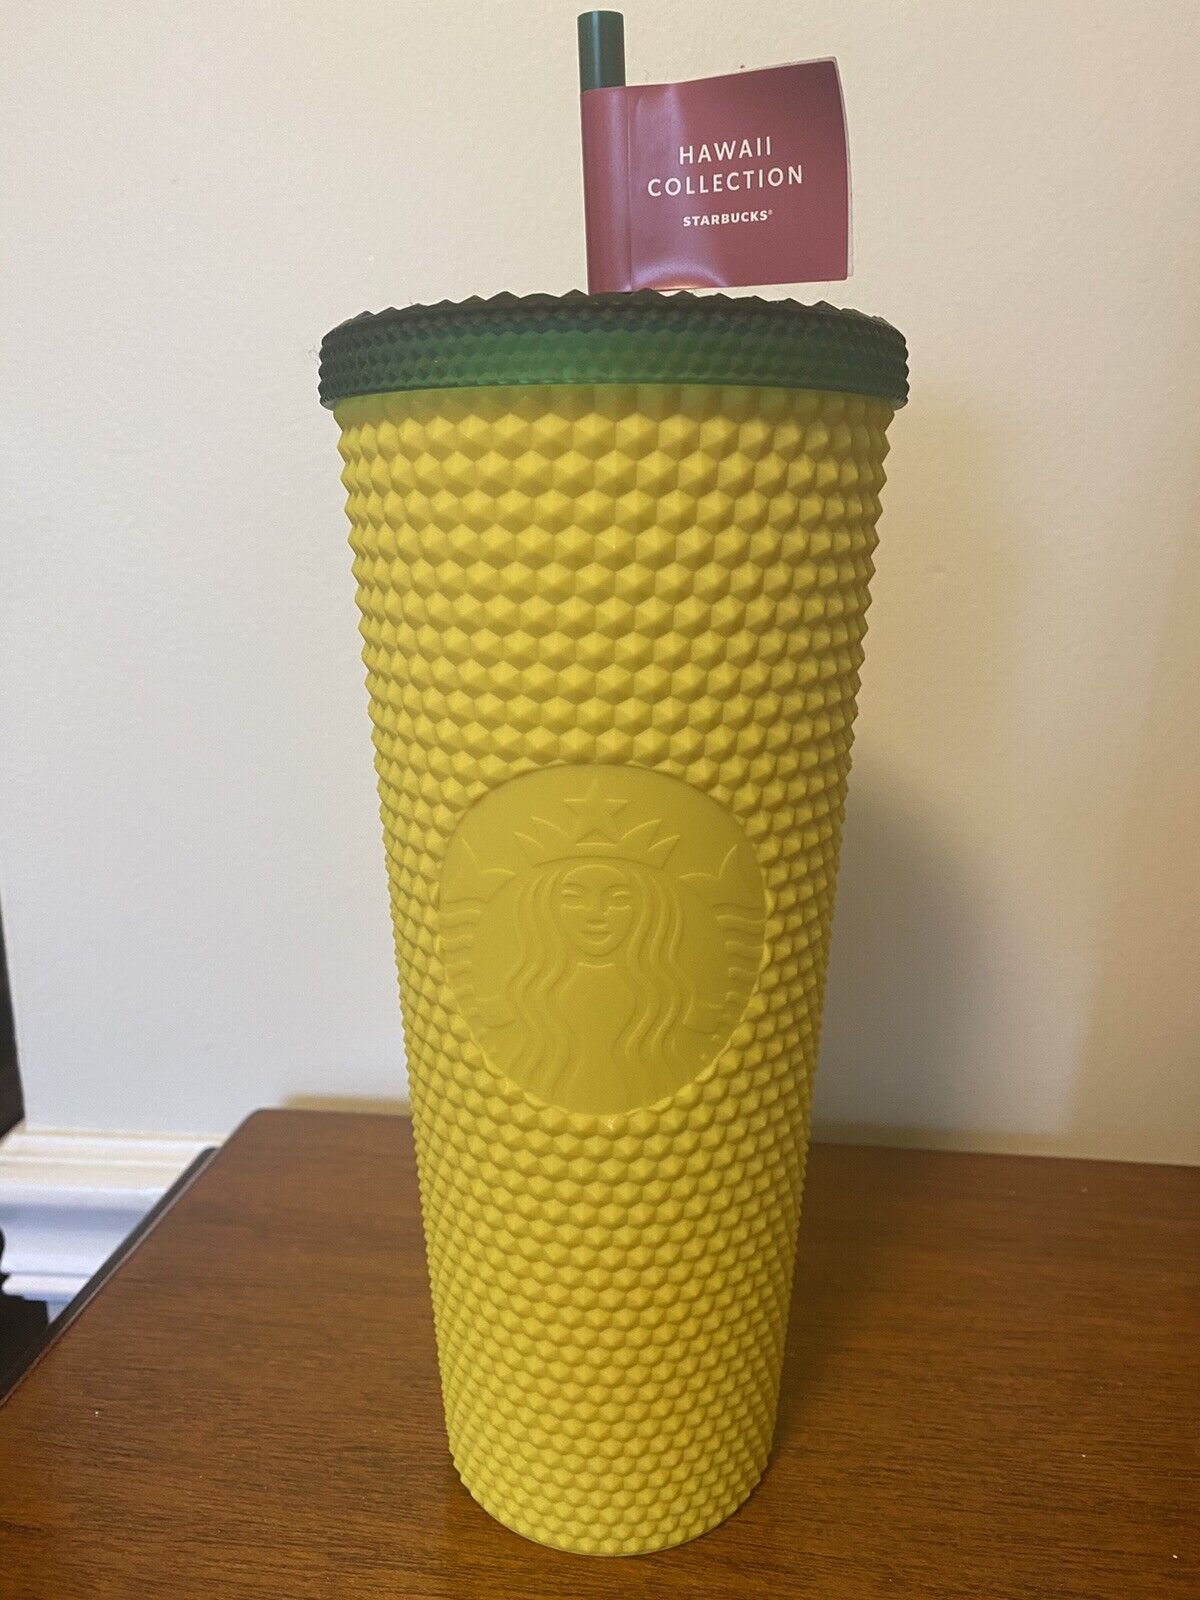 Authentic Hawaiian Starbucks Cup